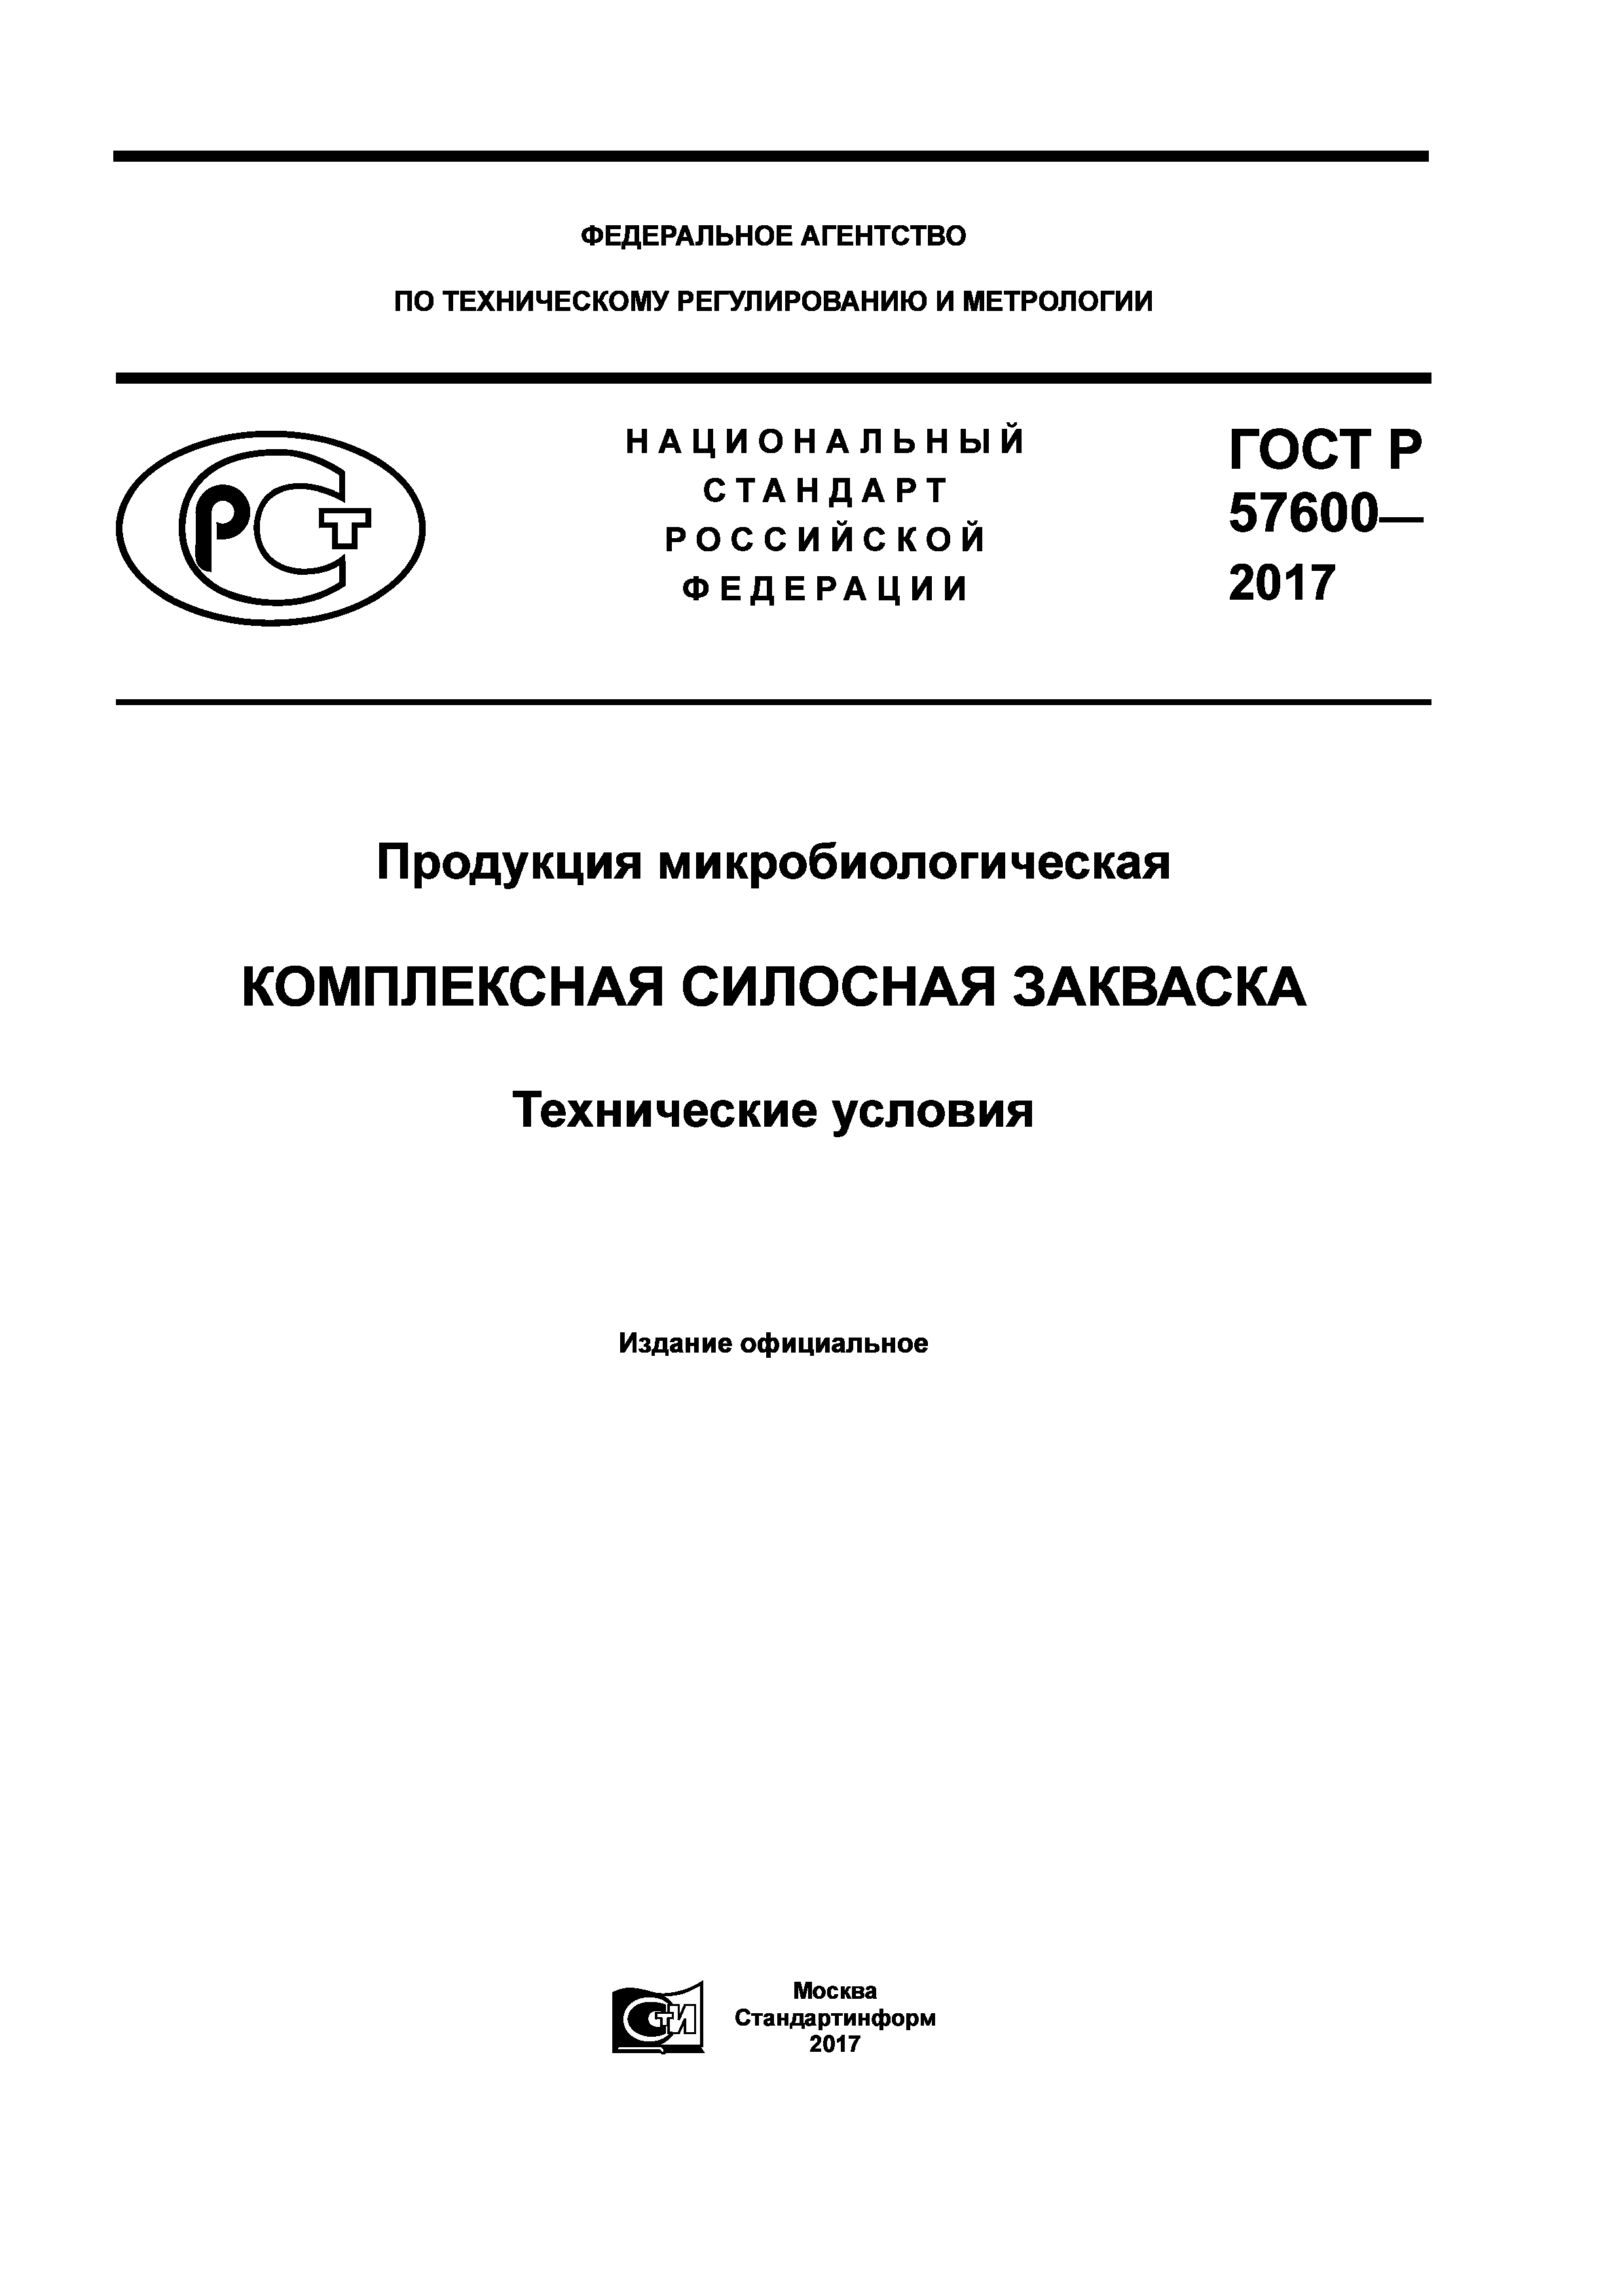 ГОСТ Р 57600-2017